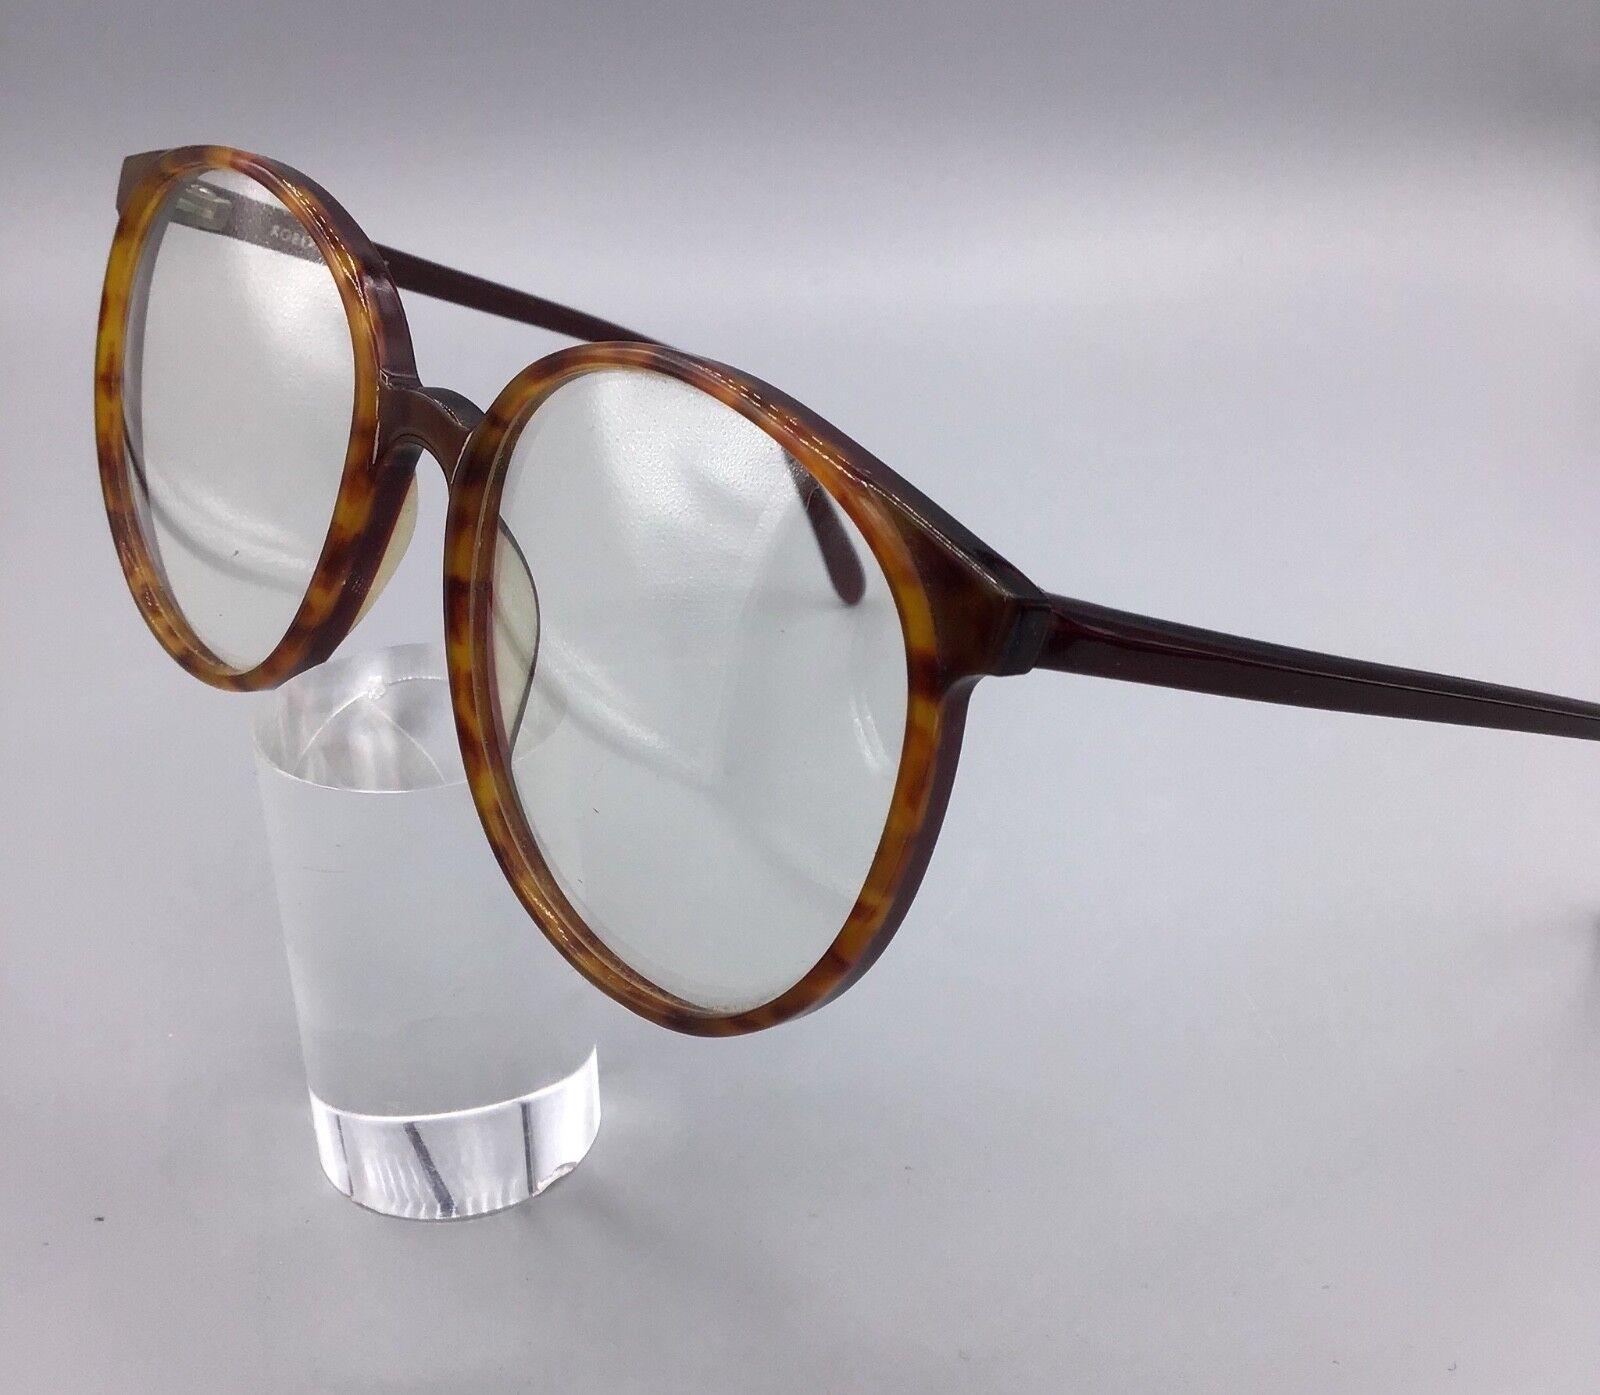 Robert La Roche occhiale vintage eyewear brillen lunettes gafas